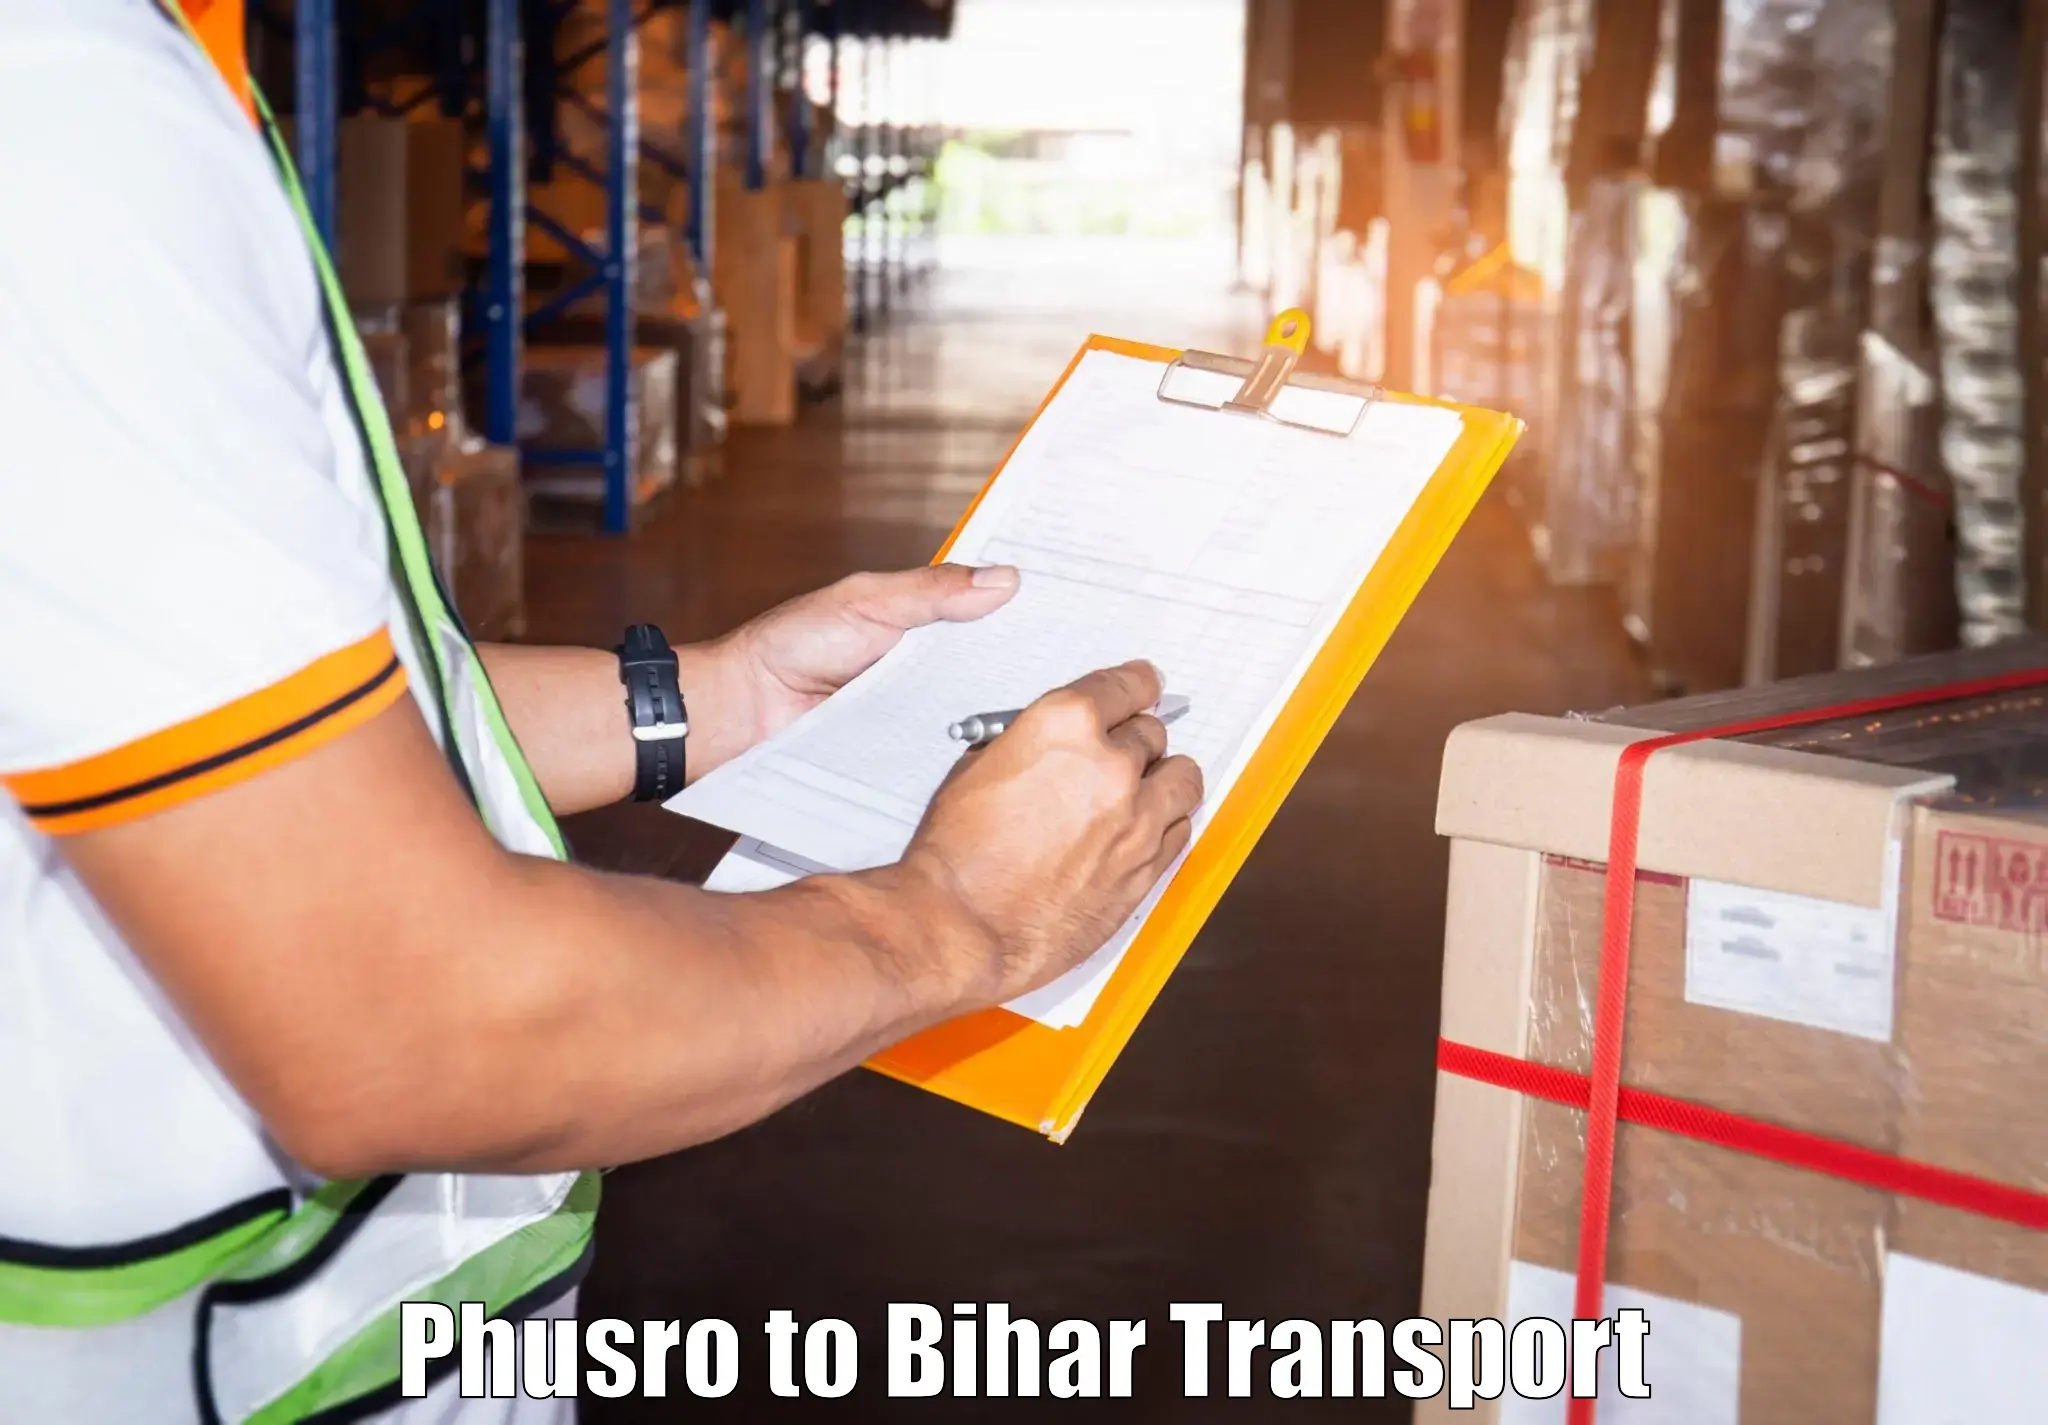 Bike transport service Phusro to Lakhisarai